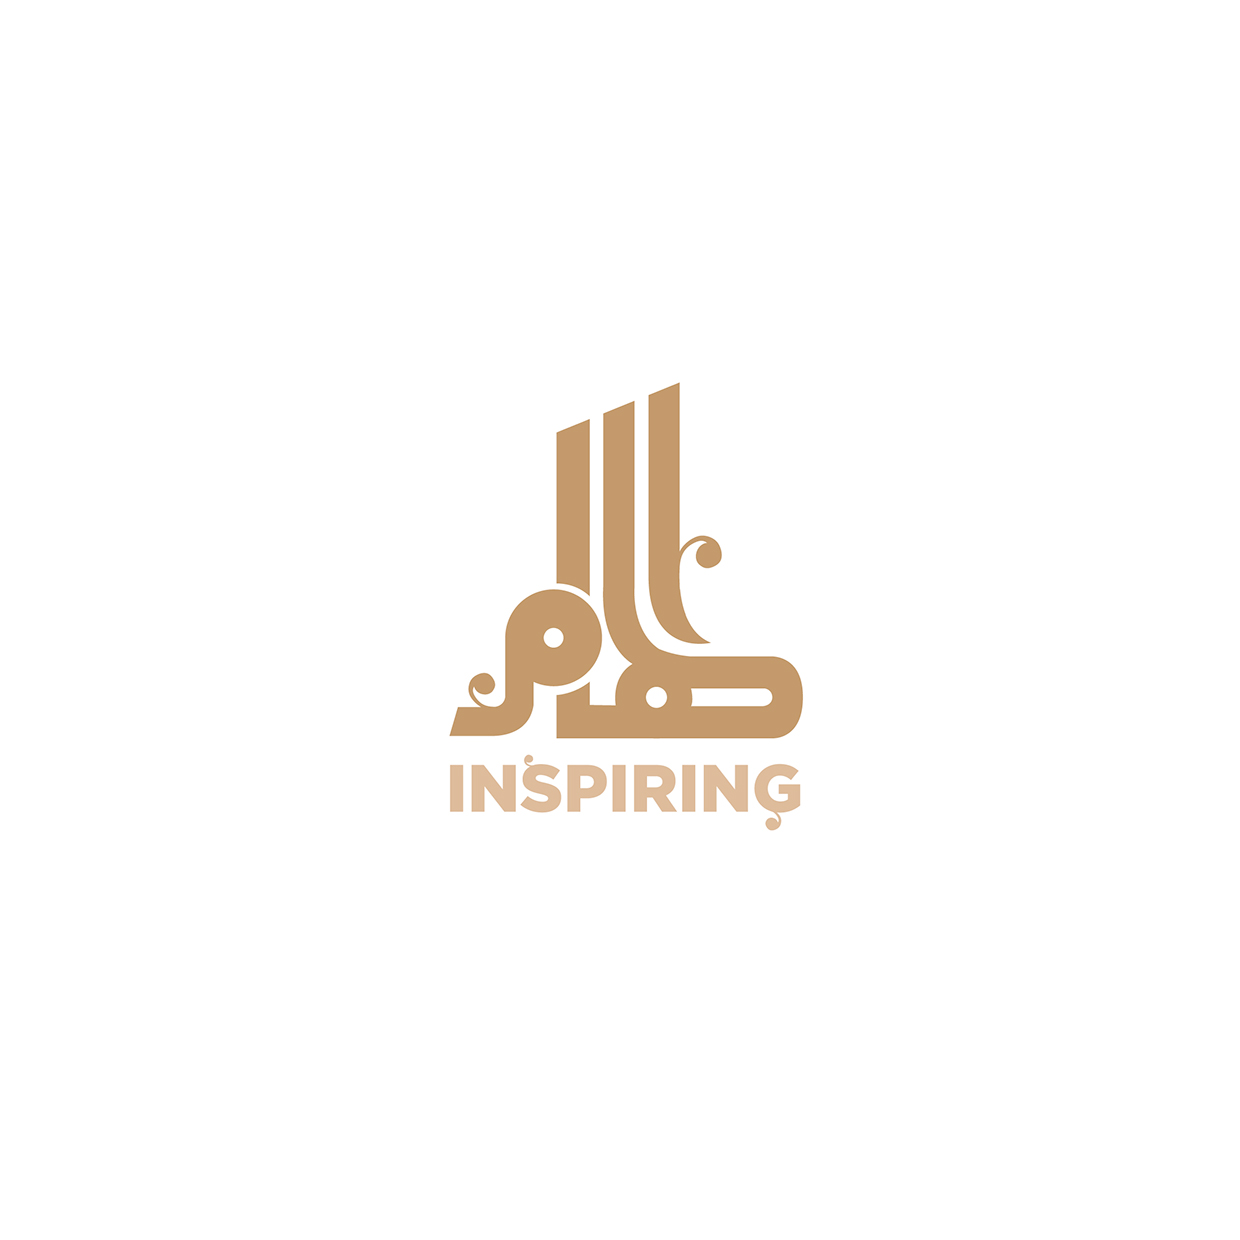 Arabic Logo Designs - 16 Inspiring Arabic logos from 2015